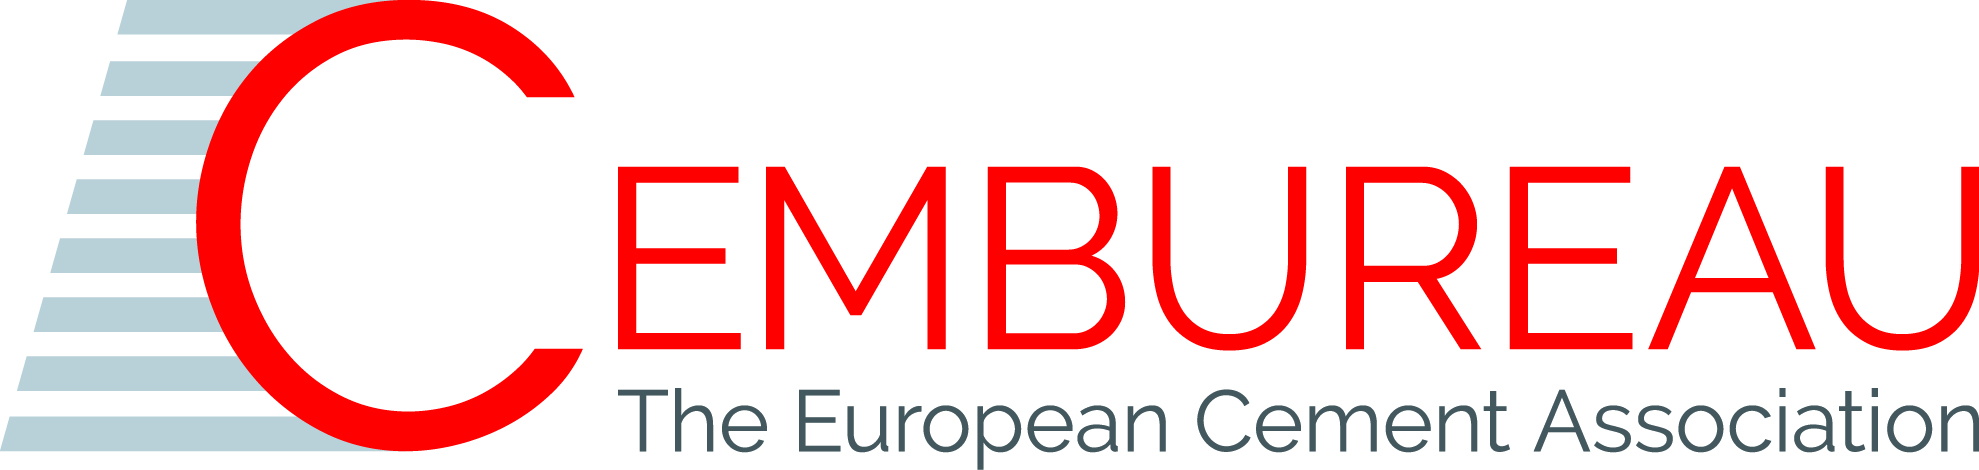 CEMBUREAU - European Cement Association